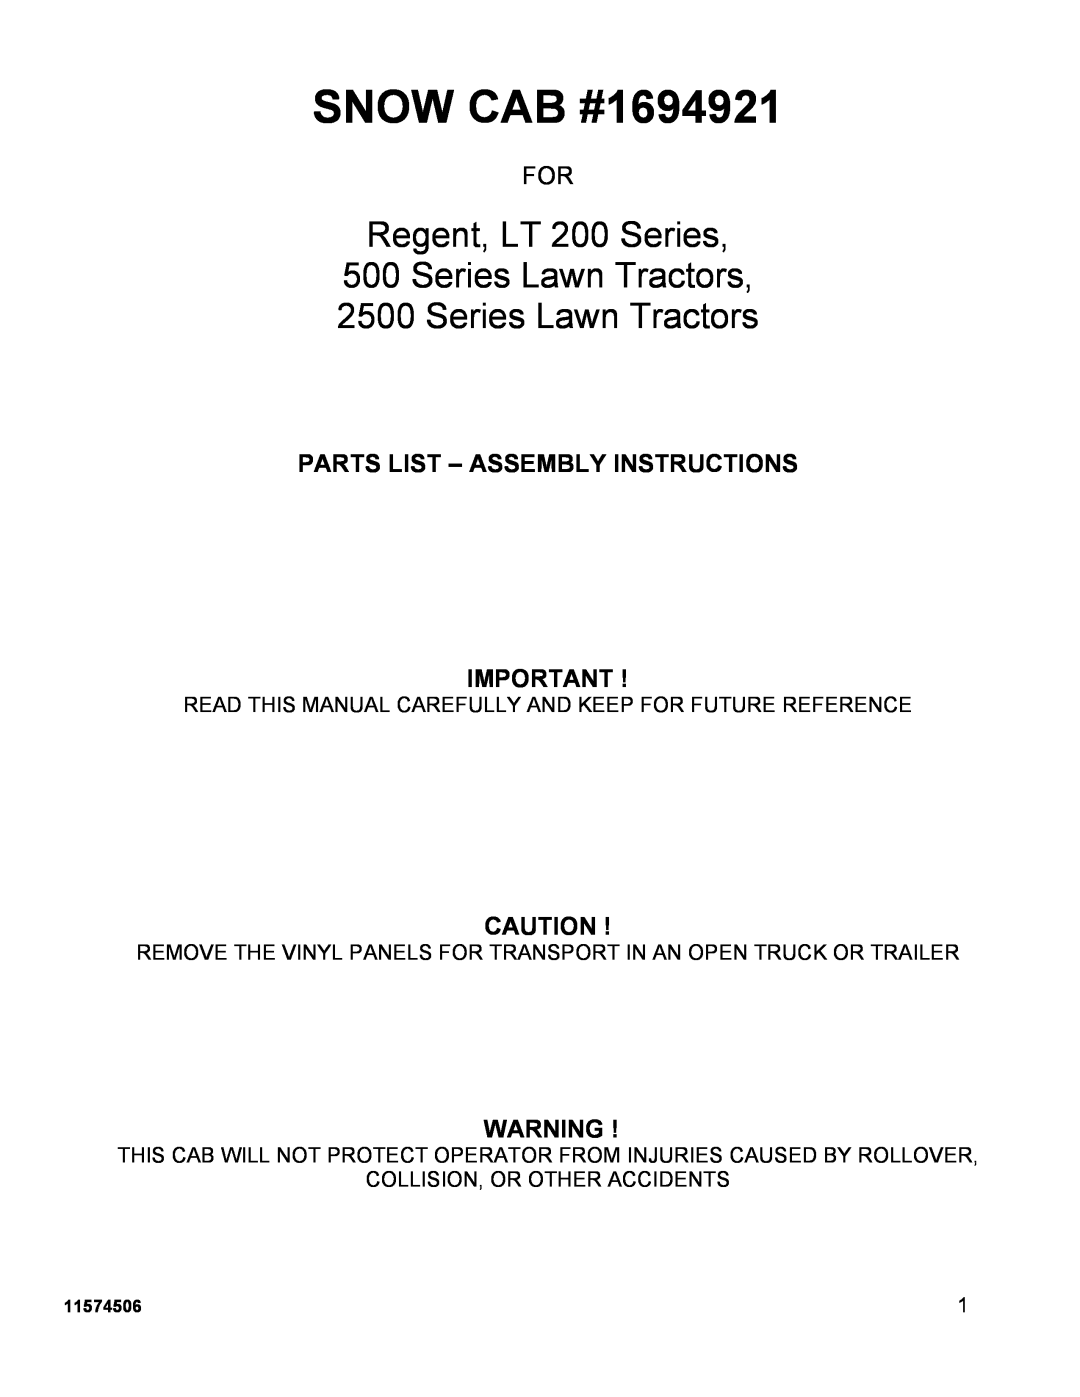 Snapper manual Parts List - Assembly Instructions, SNOW CAB #1694921, Regent, LT 200 Series 500 Series Lawn Tractors 